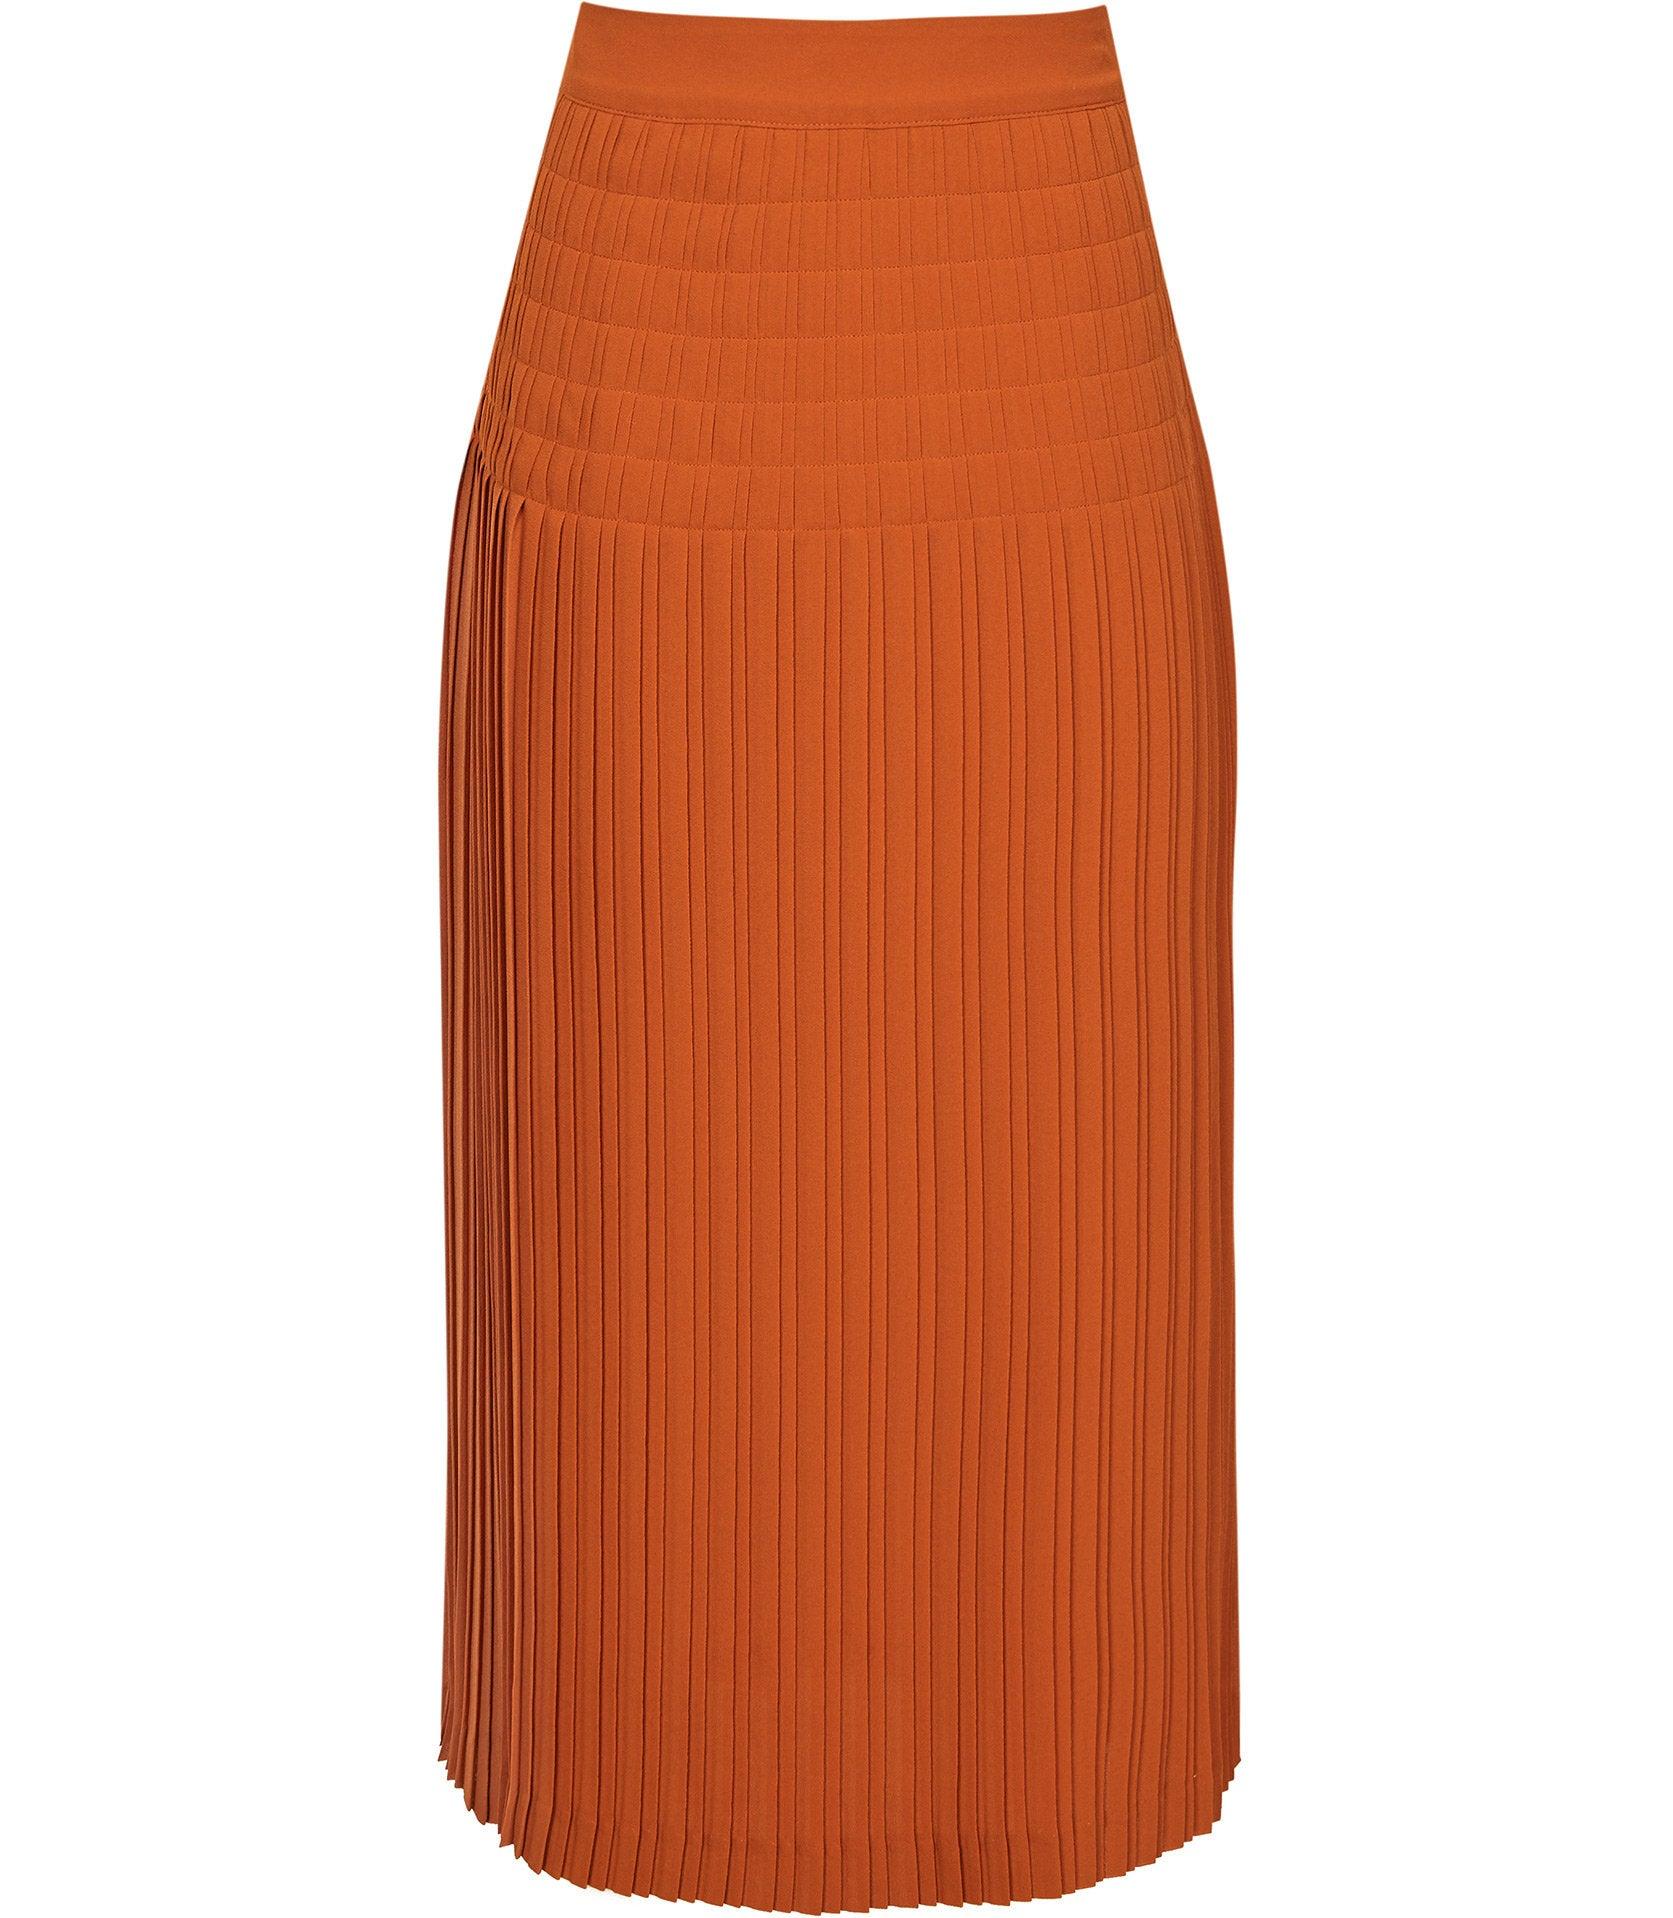 Reiss Pleated Midi Skirt in Burnt Orange (Orange) - Lyst